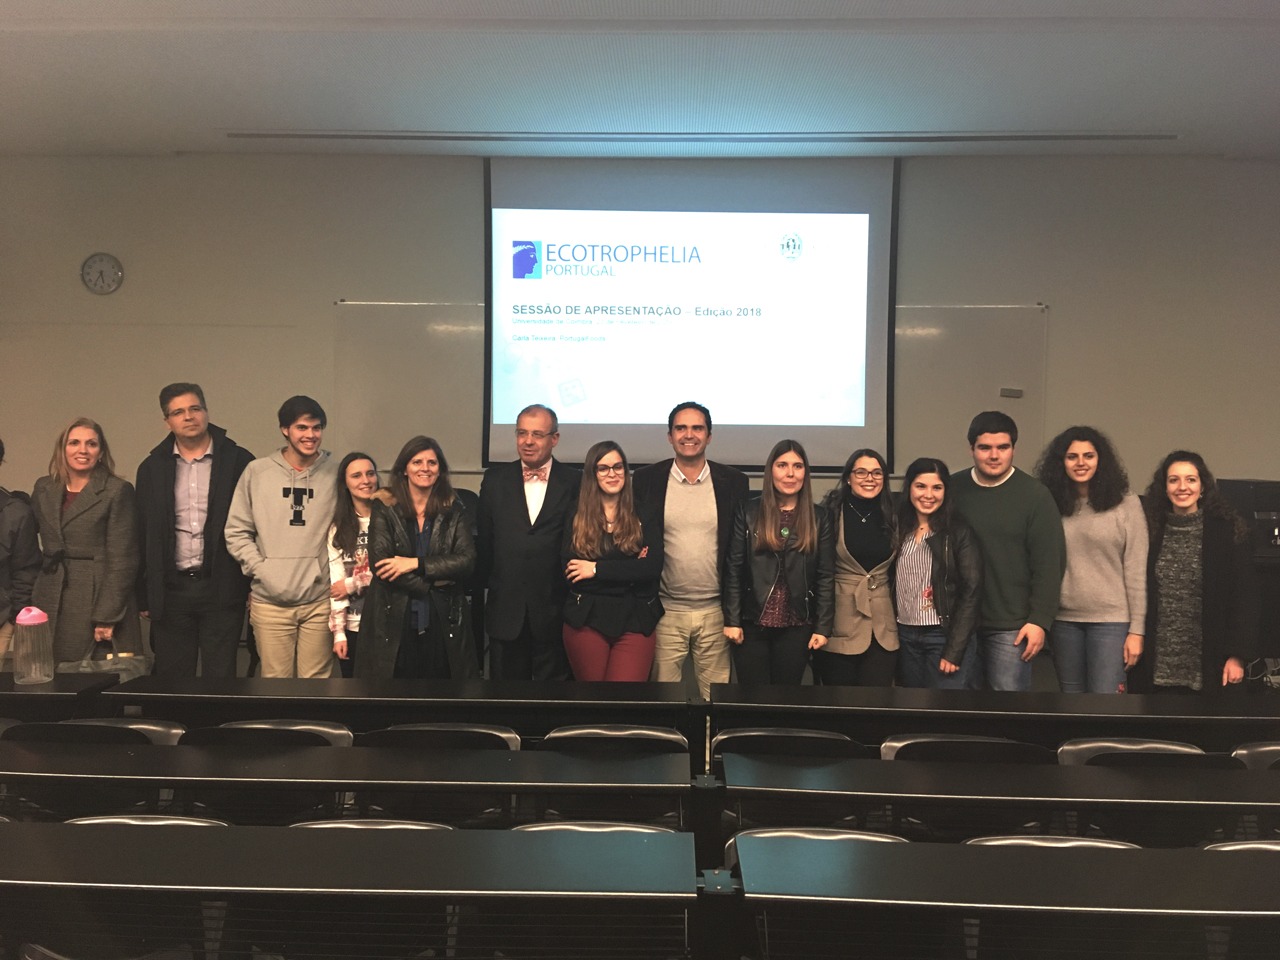 Ecotrophelia Portugal, Media, Clipping, Prémio ECOTROPHELIA lança desafio a estudantes